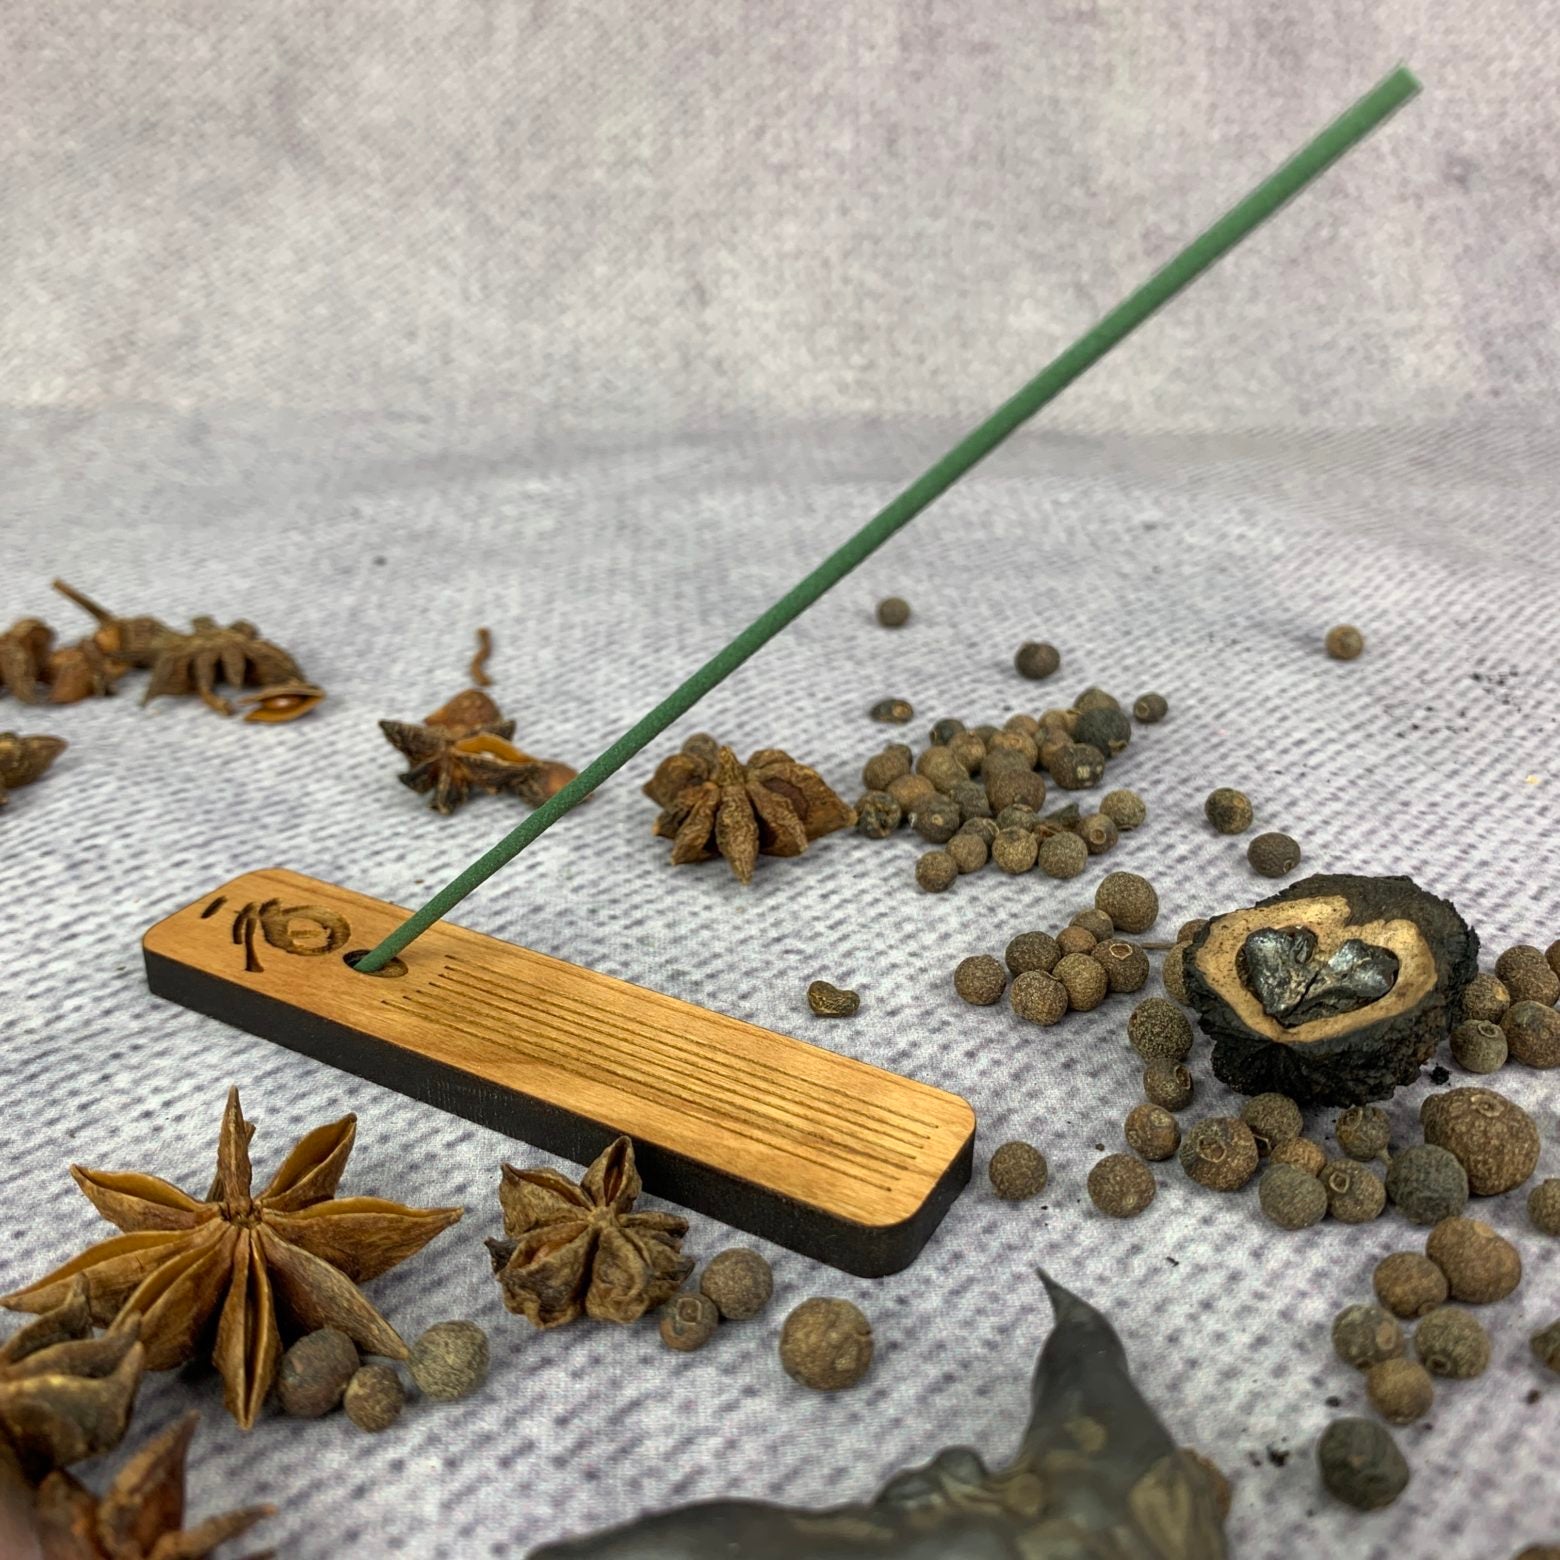 Amethyst Incense Gift Set - Balance Calm Peaceful Home